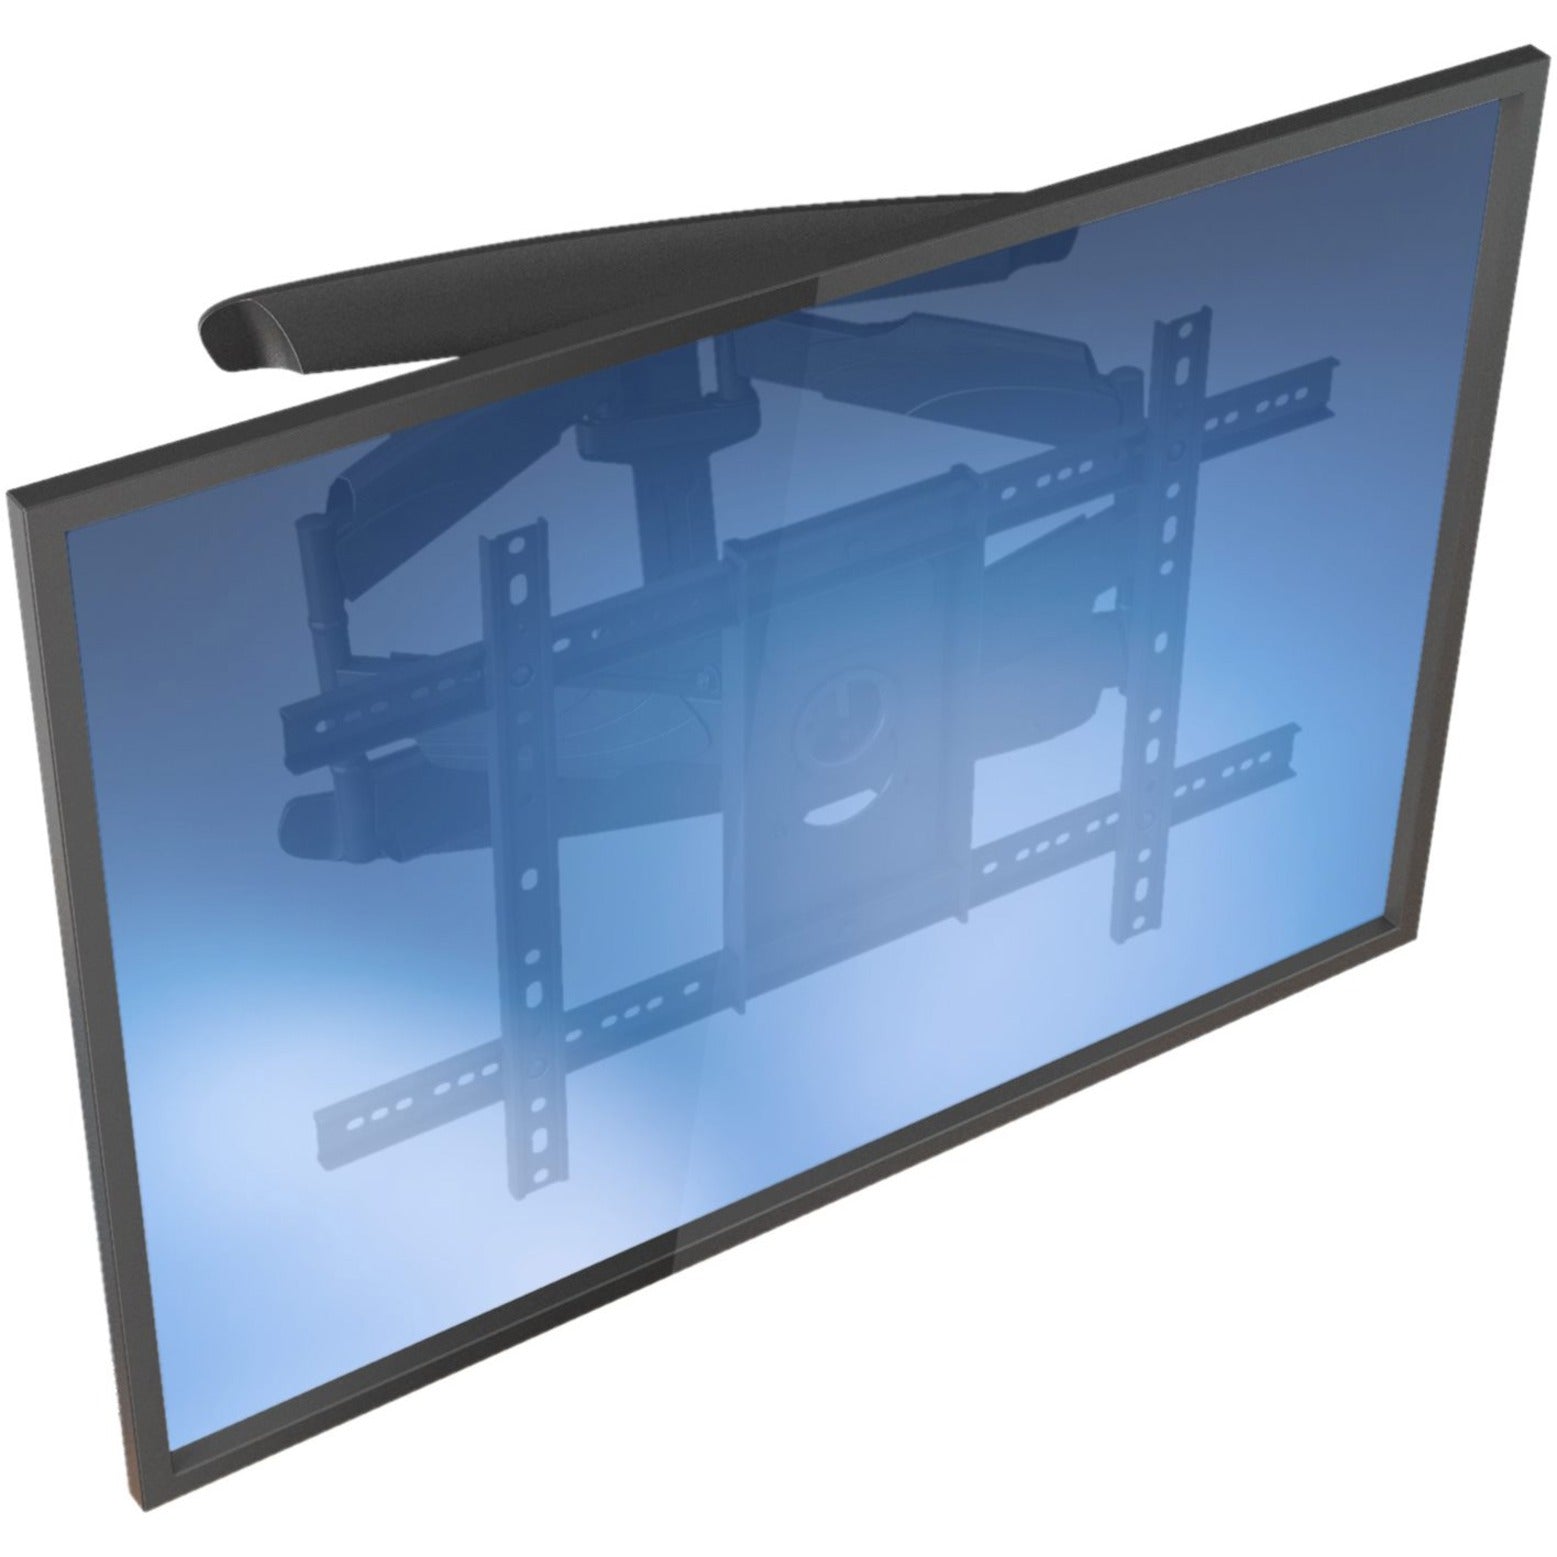 StarTech.com FPWARTB2 Full-Motion TV Wall Mount, Heavy Duty Steel, Supports 32-70in LED/LCD TVs up to 99 lb, VESA Mount Compliant